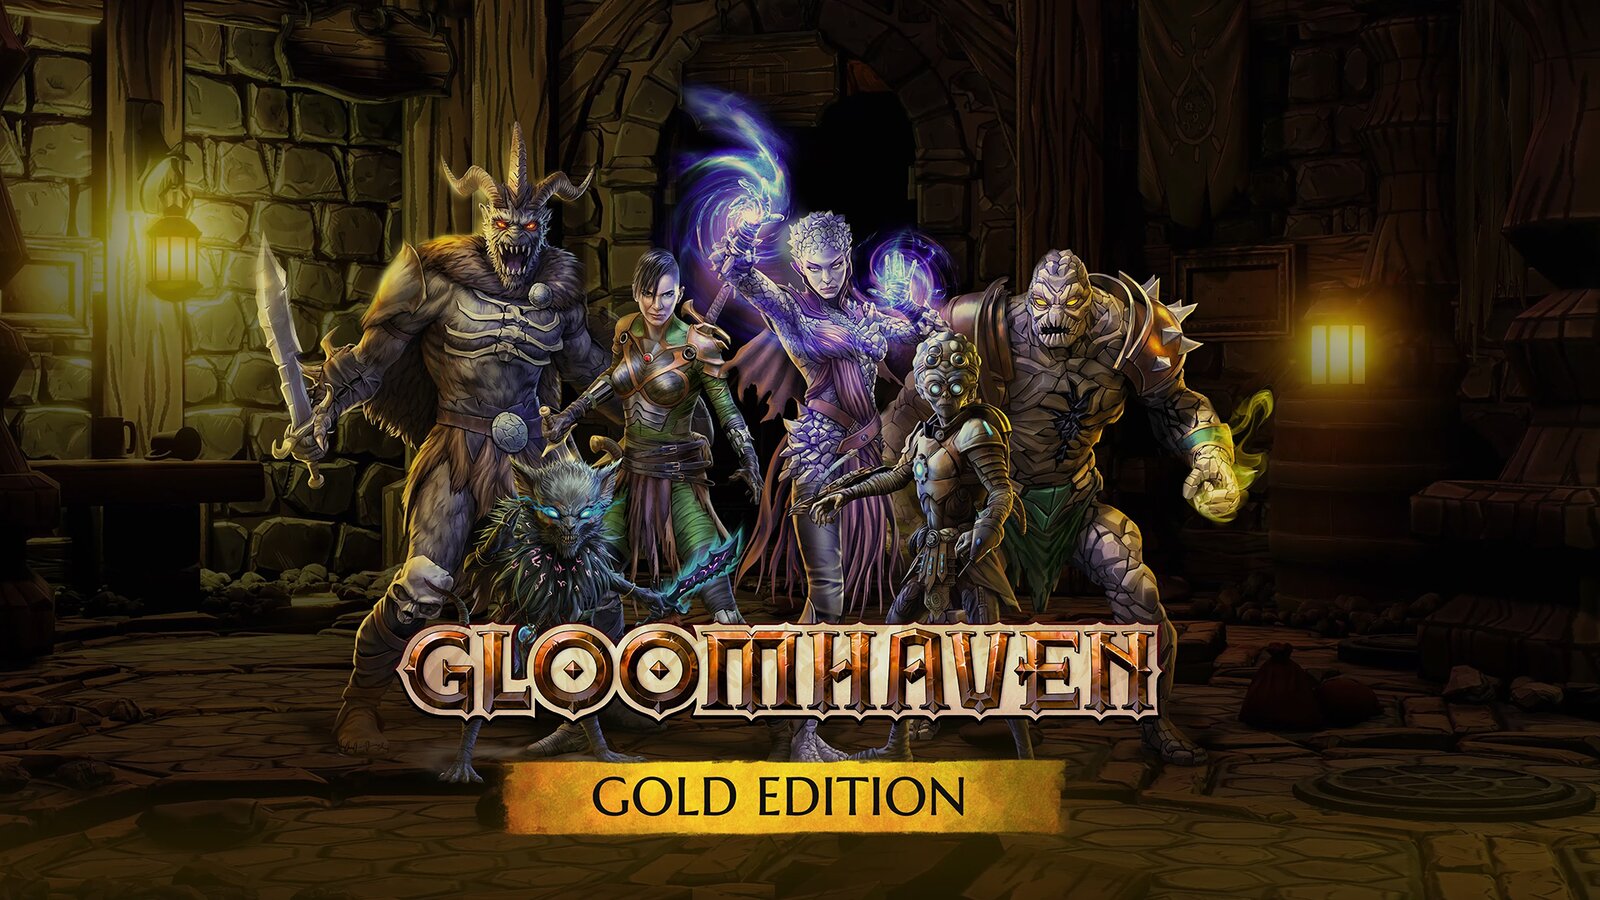 Gloomhaven - Gold Edition